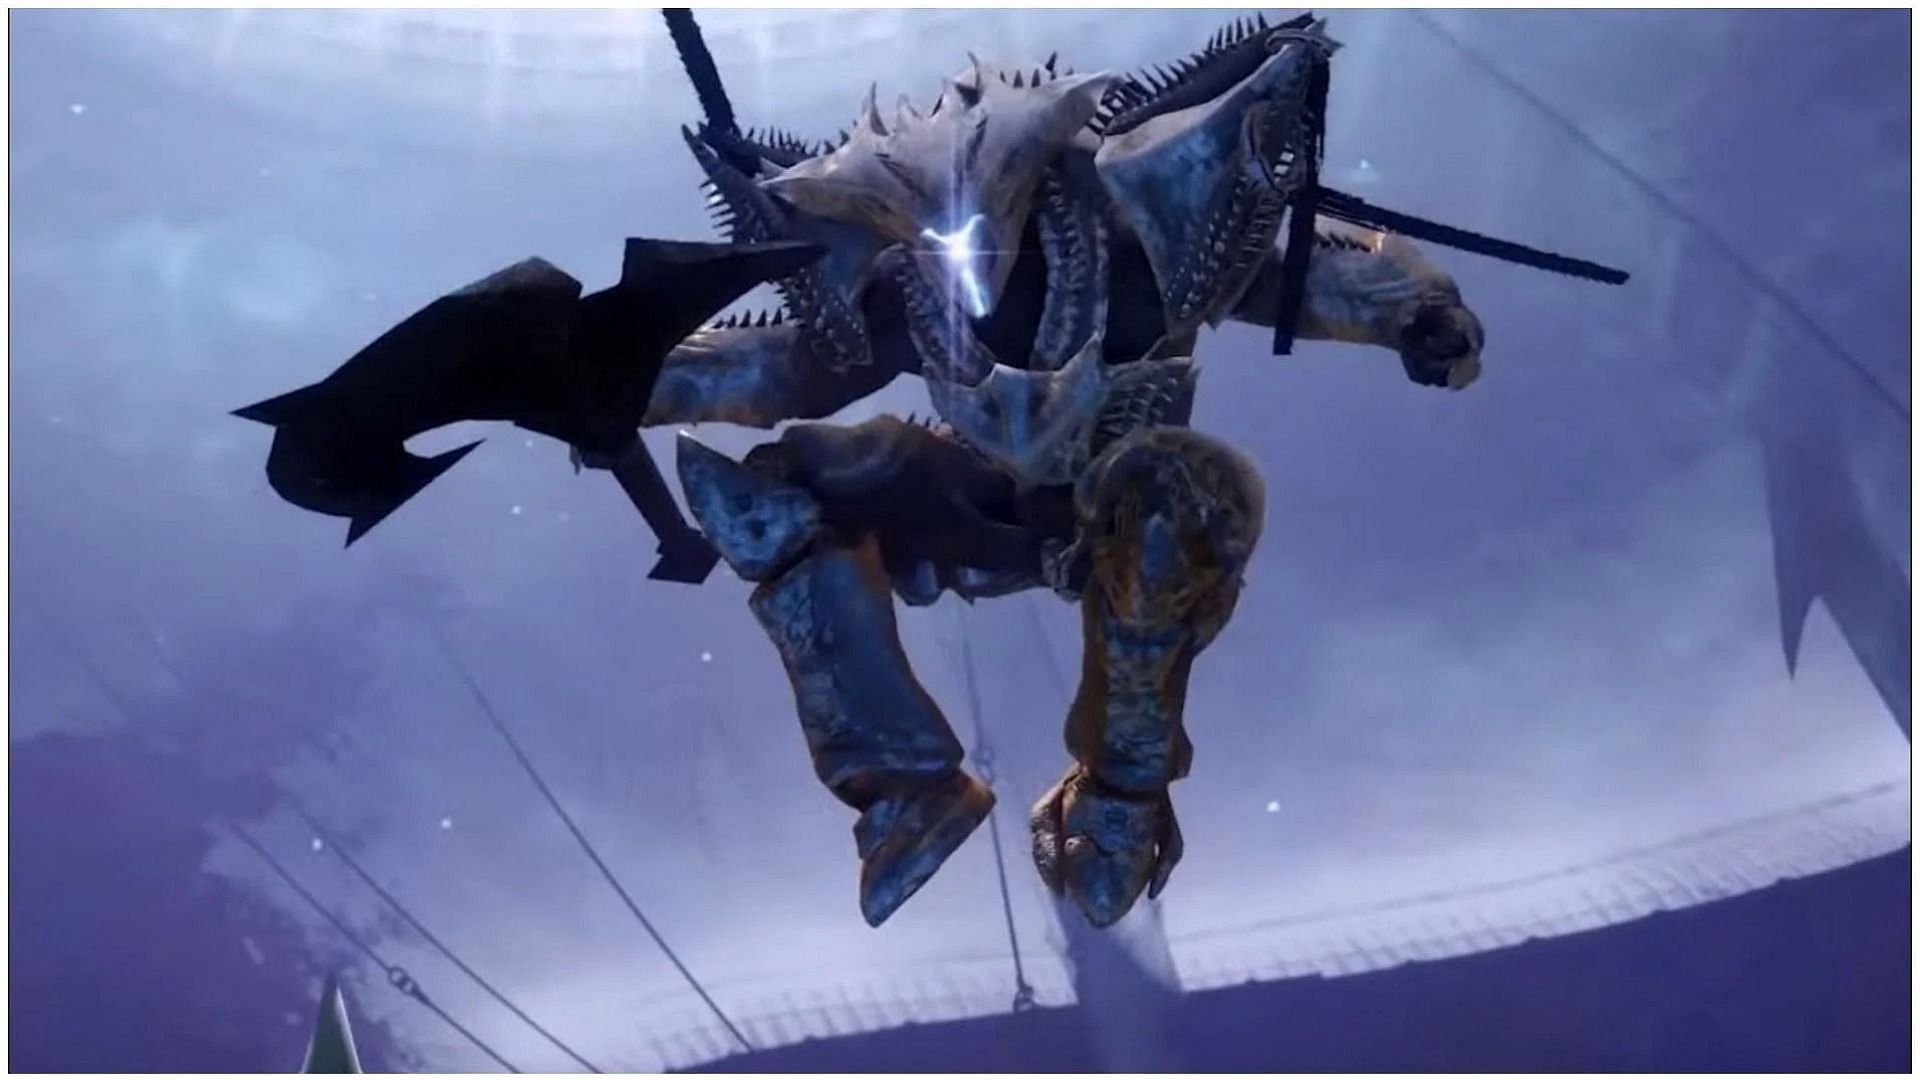 Lightblade final boss in Destiny 2 (Image via Bungie)